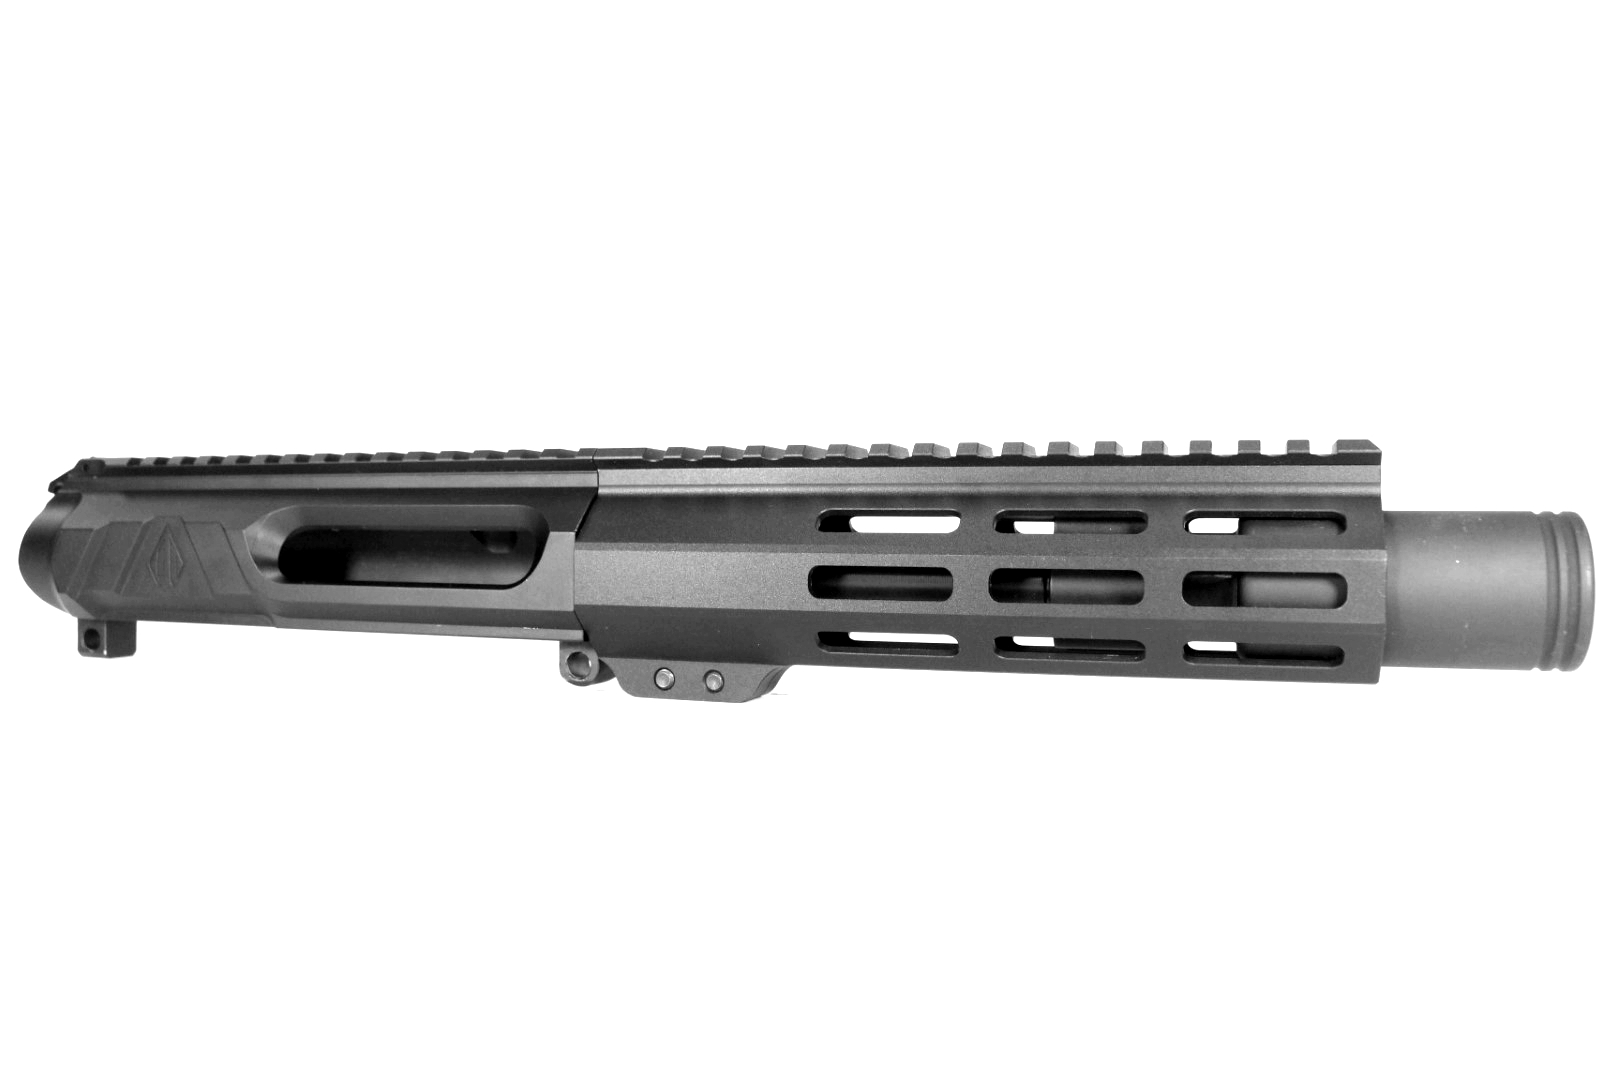 6 inch AR-15 NR Side Charging 300 BLACKOUT M-LOK Keymod Melonite Upper with Flash Can